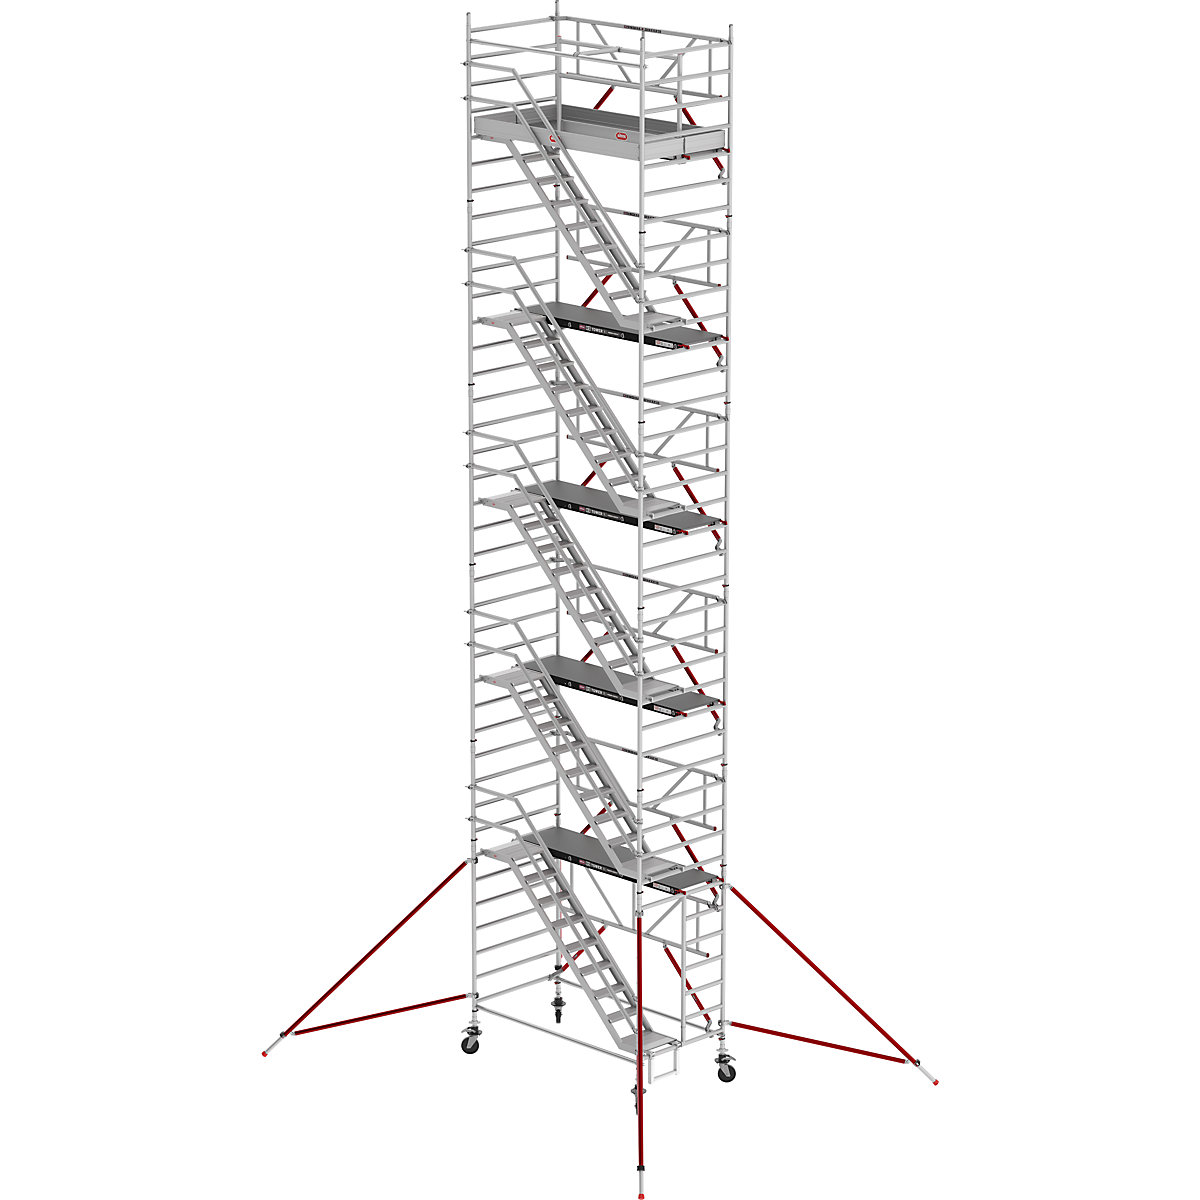 Oder s stopnicami RS TOWER 53, širok – Altrex, lesena ploščad, dolžina 1,85 m, delovna višina 12,20 m